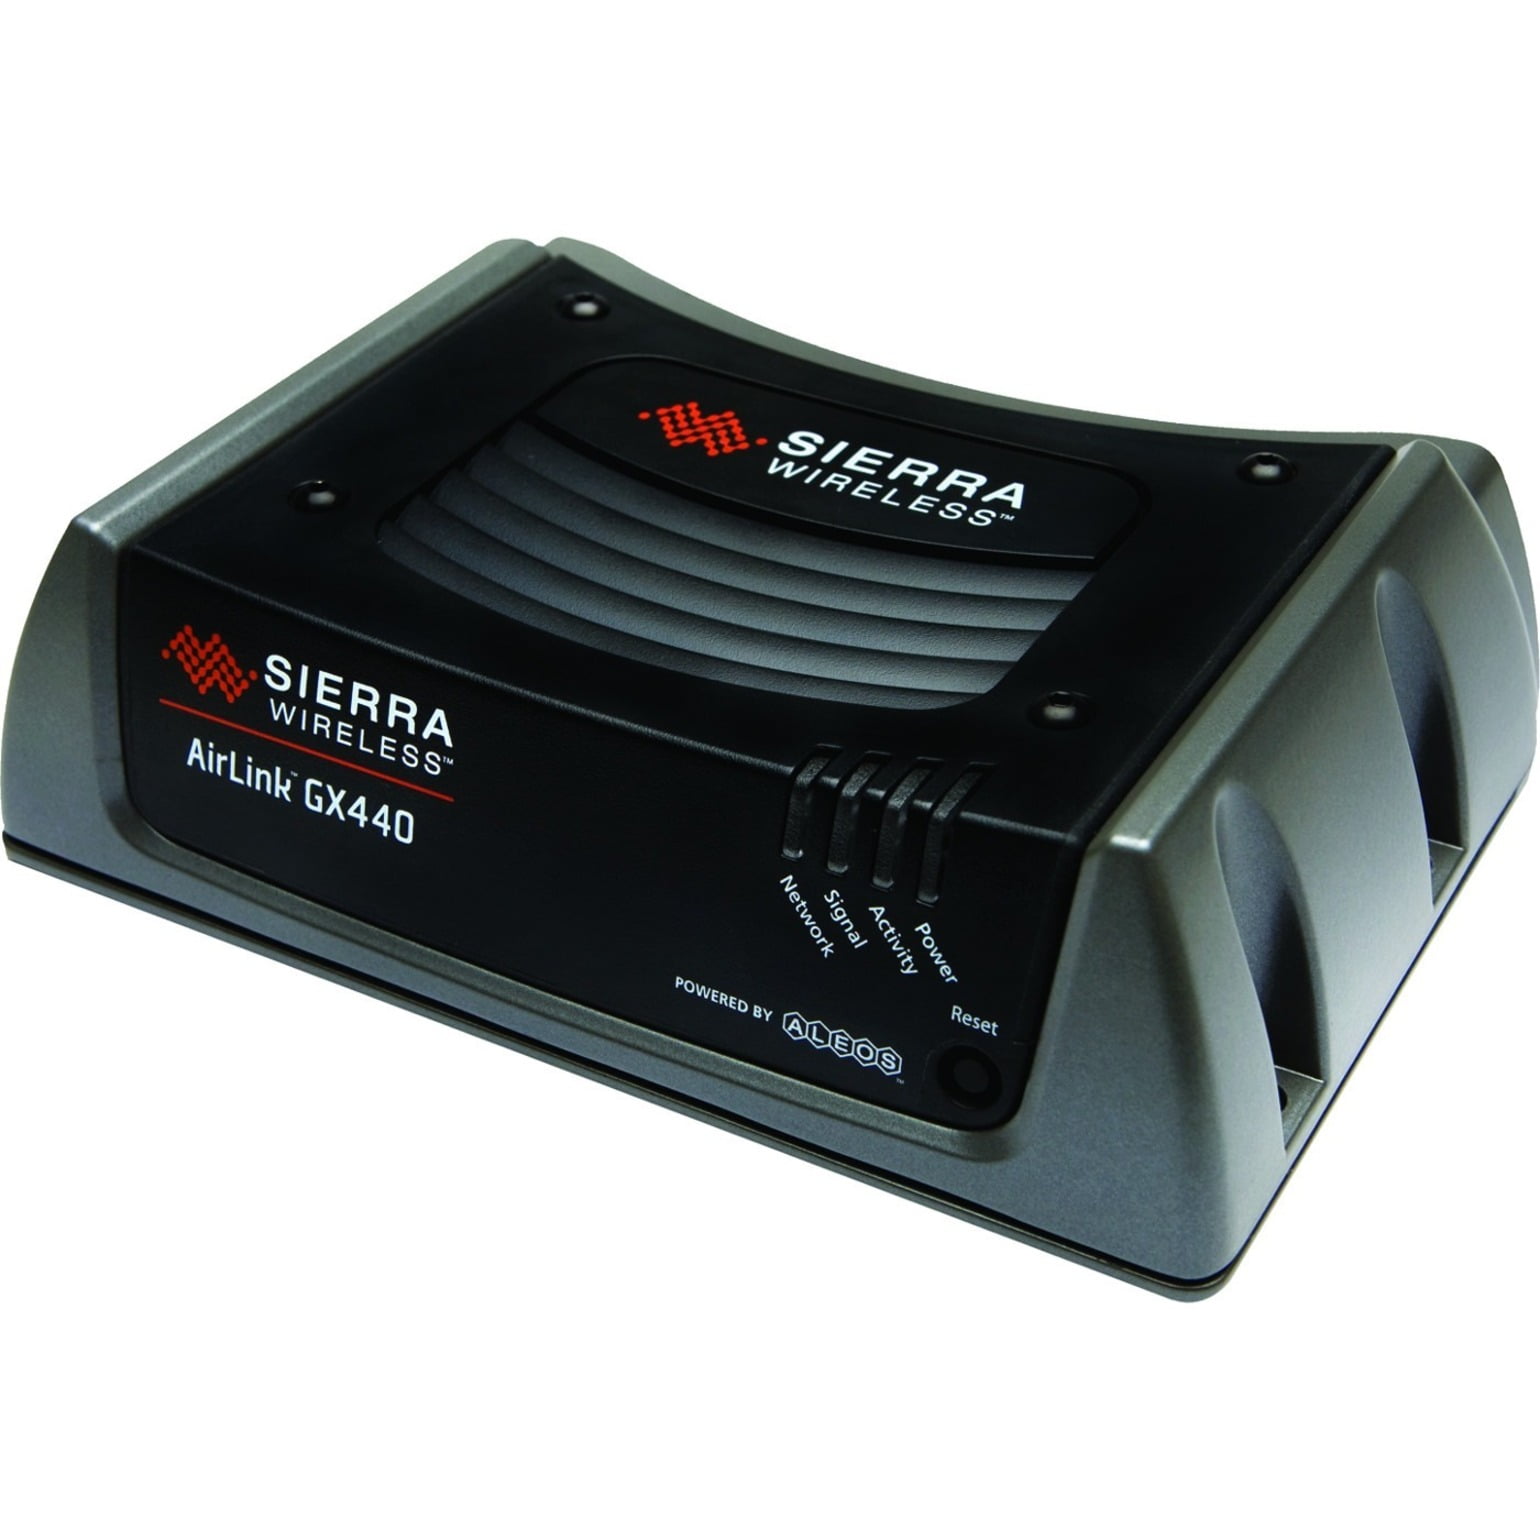 Sierra Wireless AirLink GX440 Cellular Modem/Wireless Router